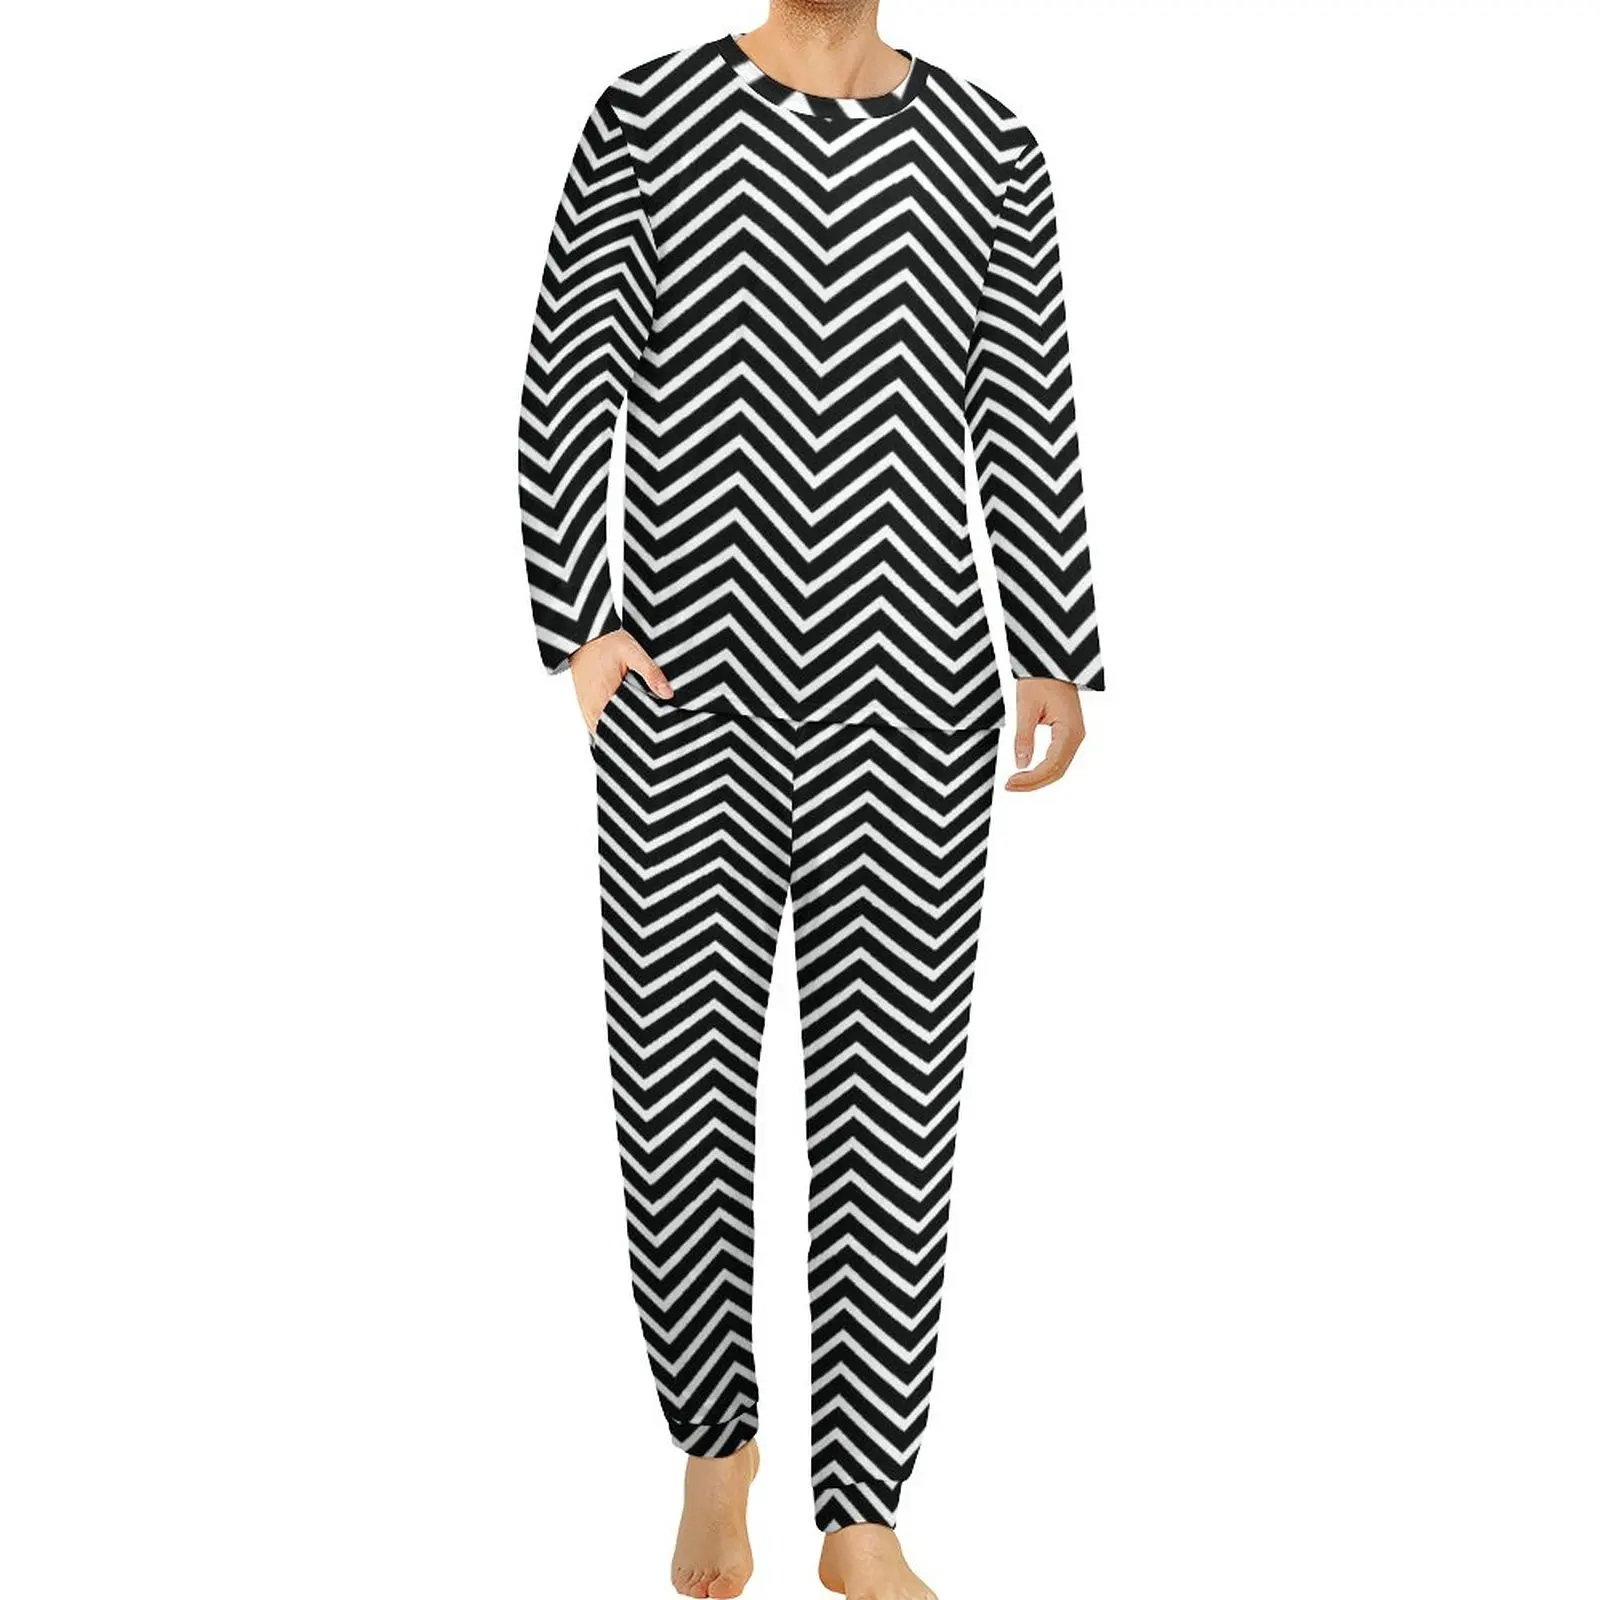 Geometry Print Pajamas Autumn Two Piece Black And White Line Kawaii Pajama Sets Men Long Sleeve Casual Graphic Nightwear 4XL 5XL